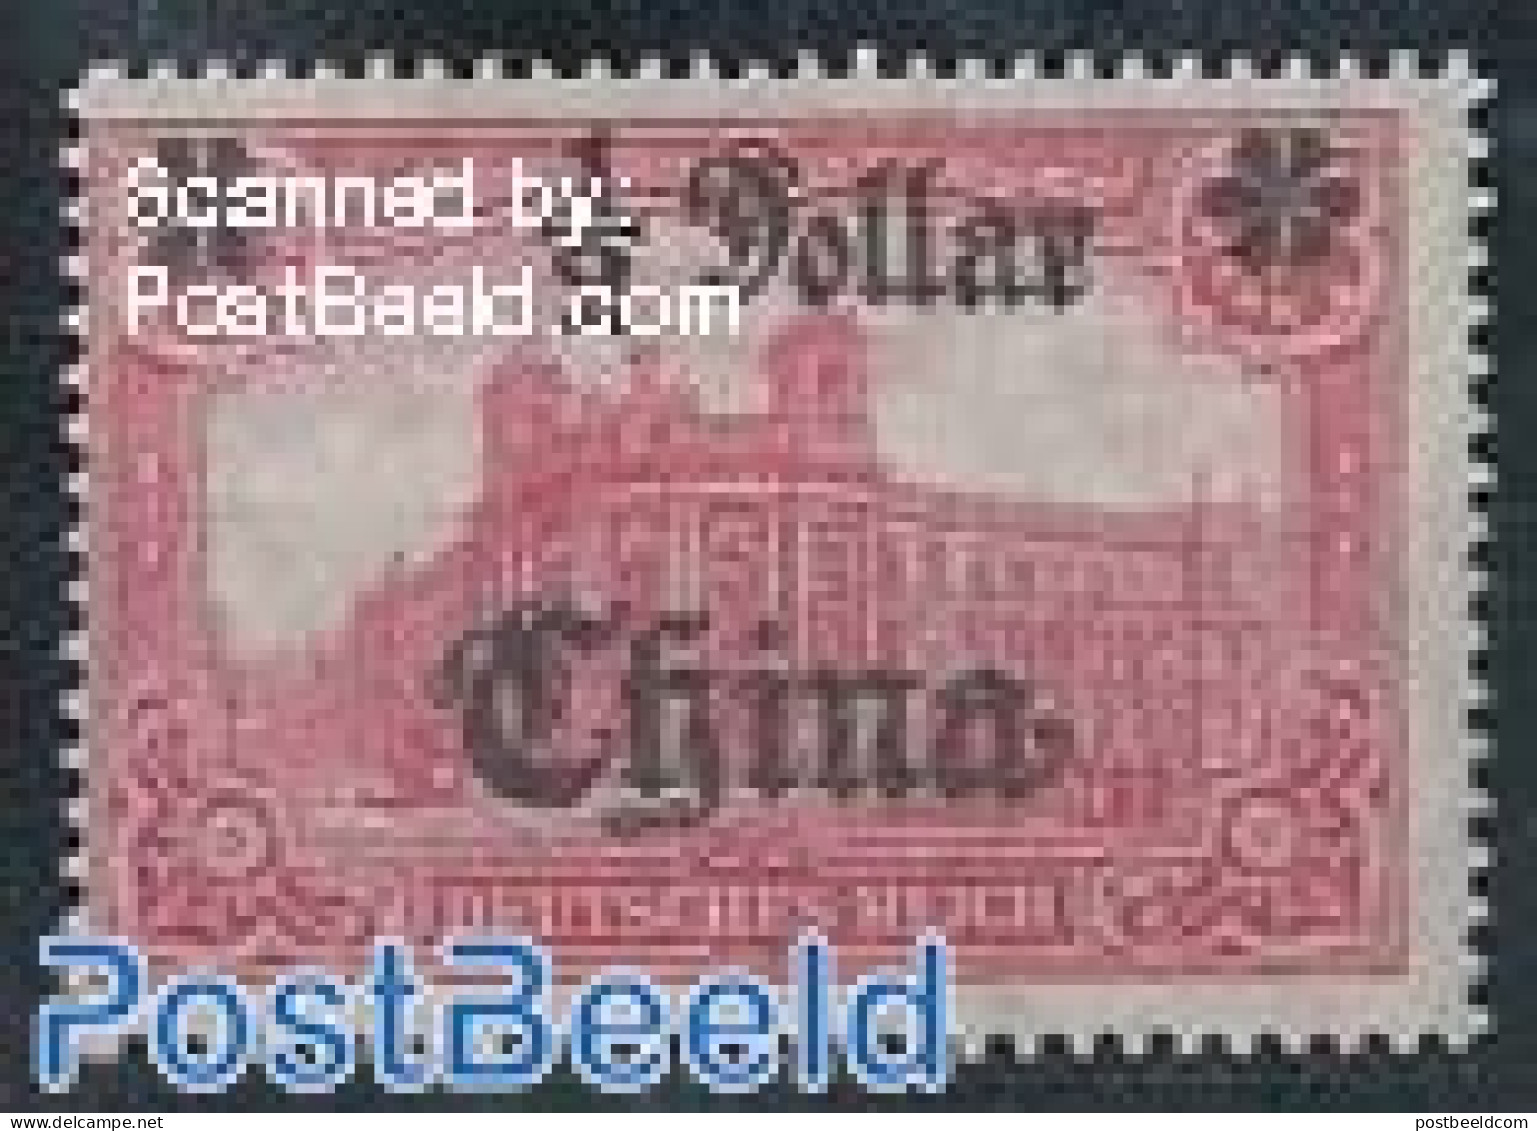 China (before 1949) 1918 German Post, 1/2$, War Print, Right Overprint, Mint NH - China (kantoren)